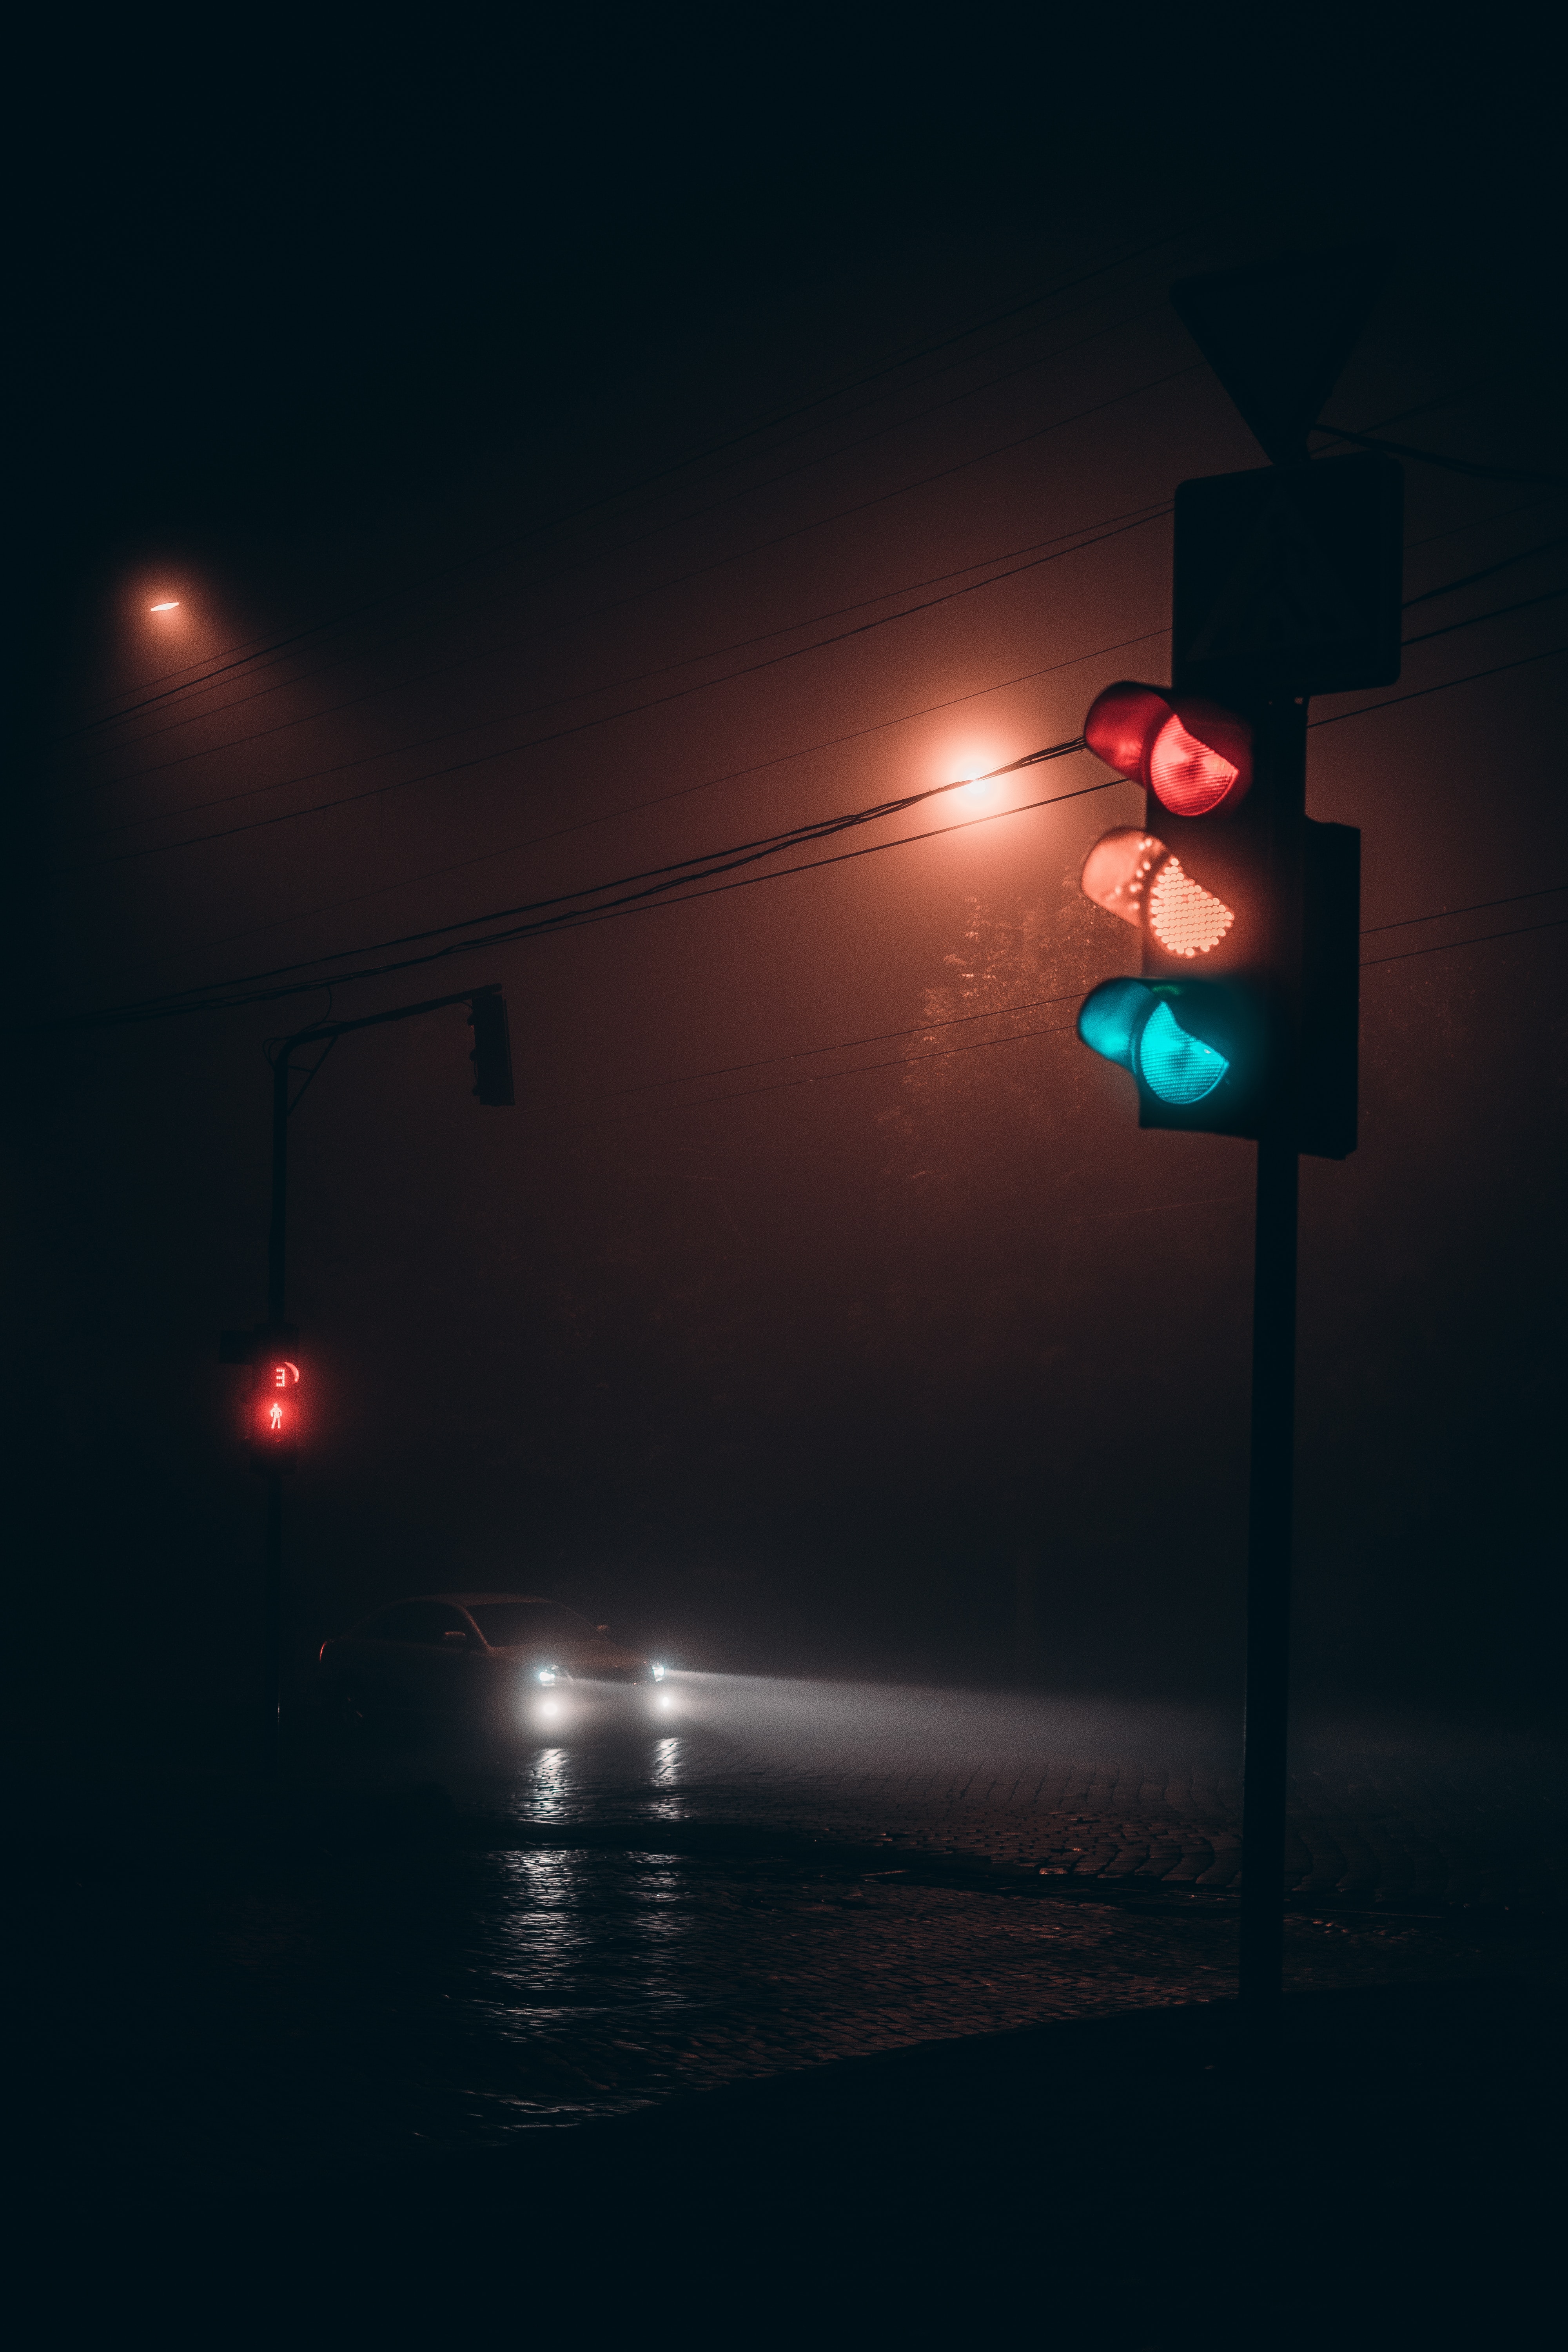 cities, fog, night, dark, road, car, machine, traffic light